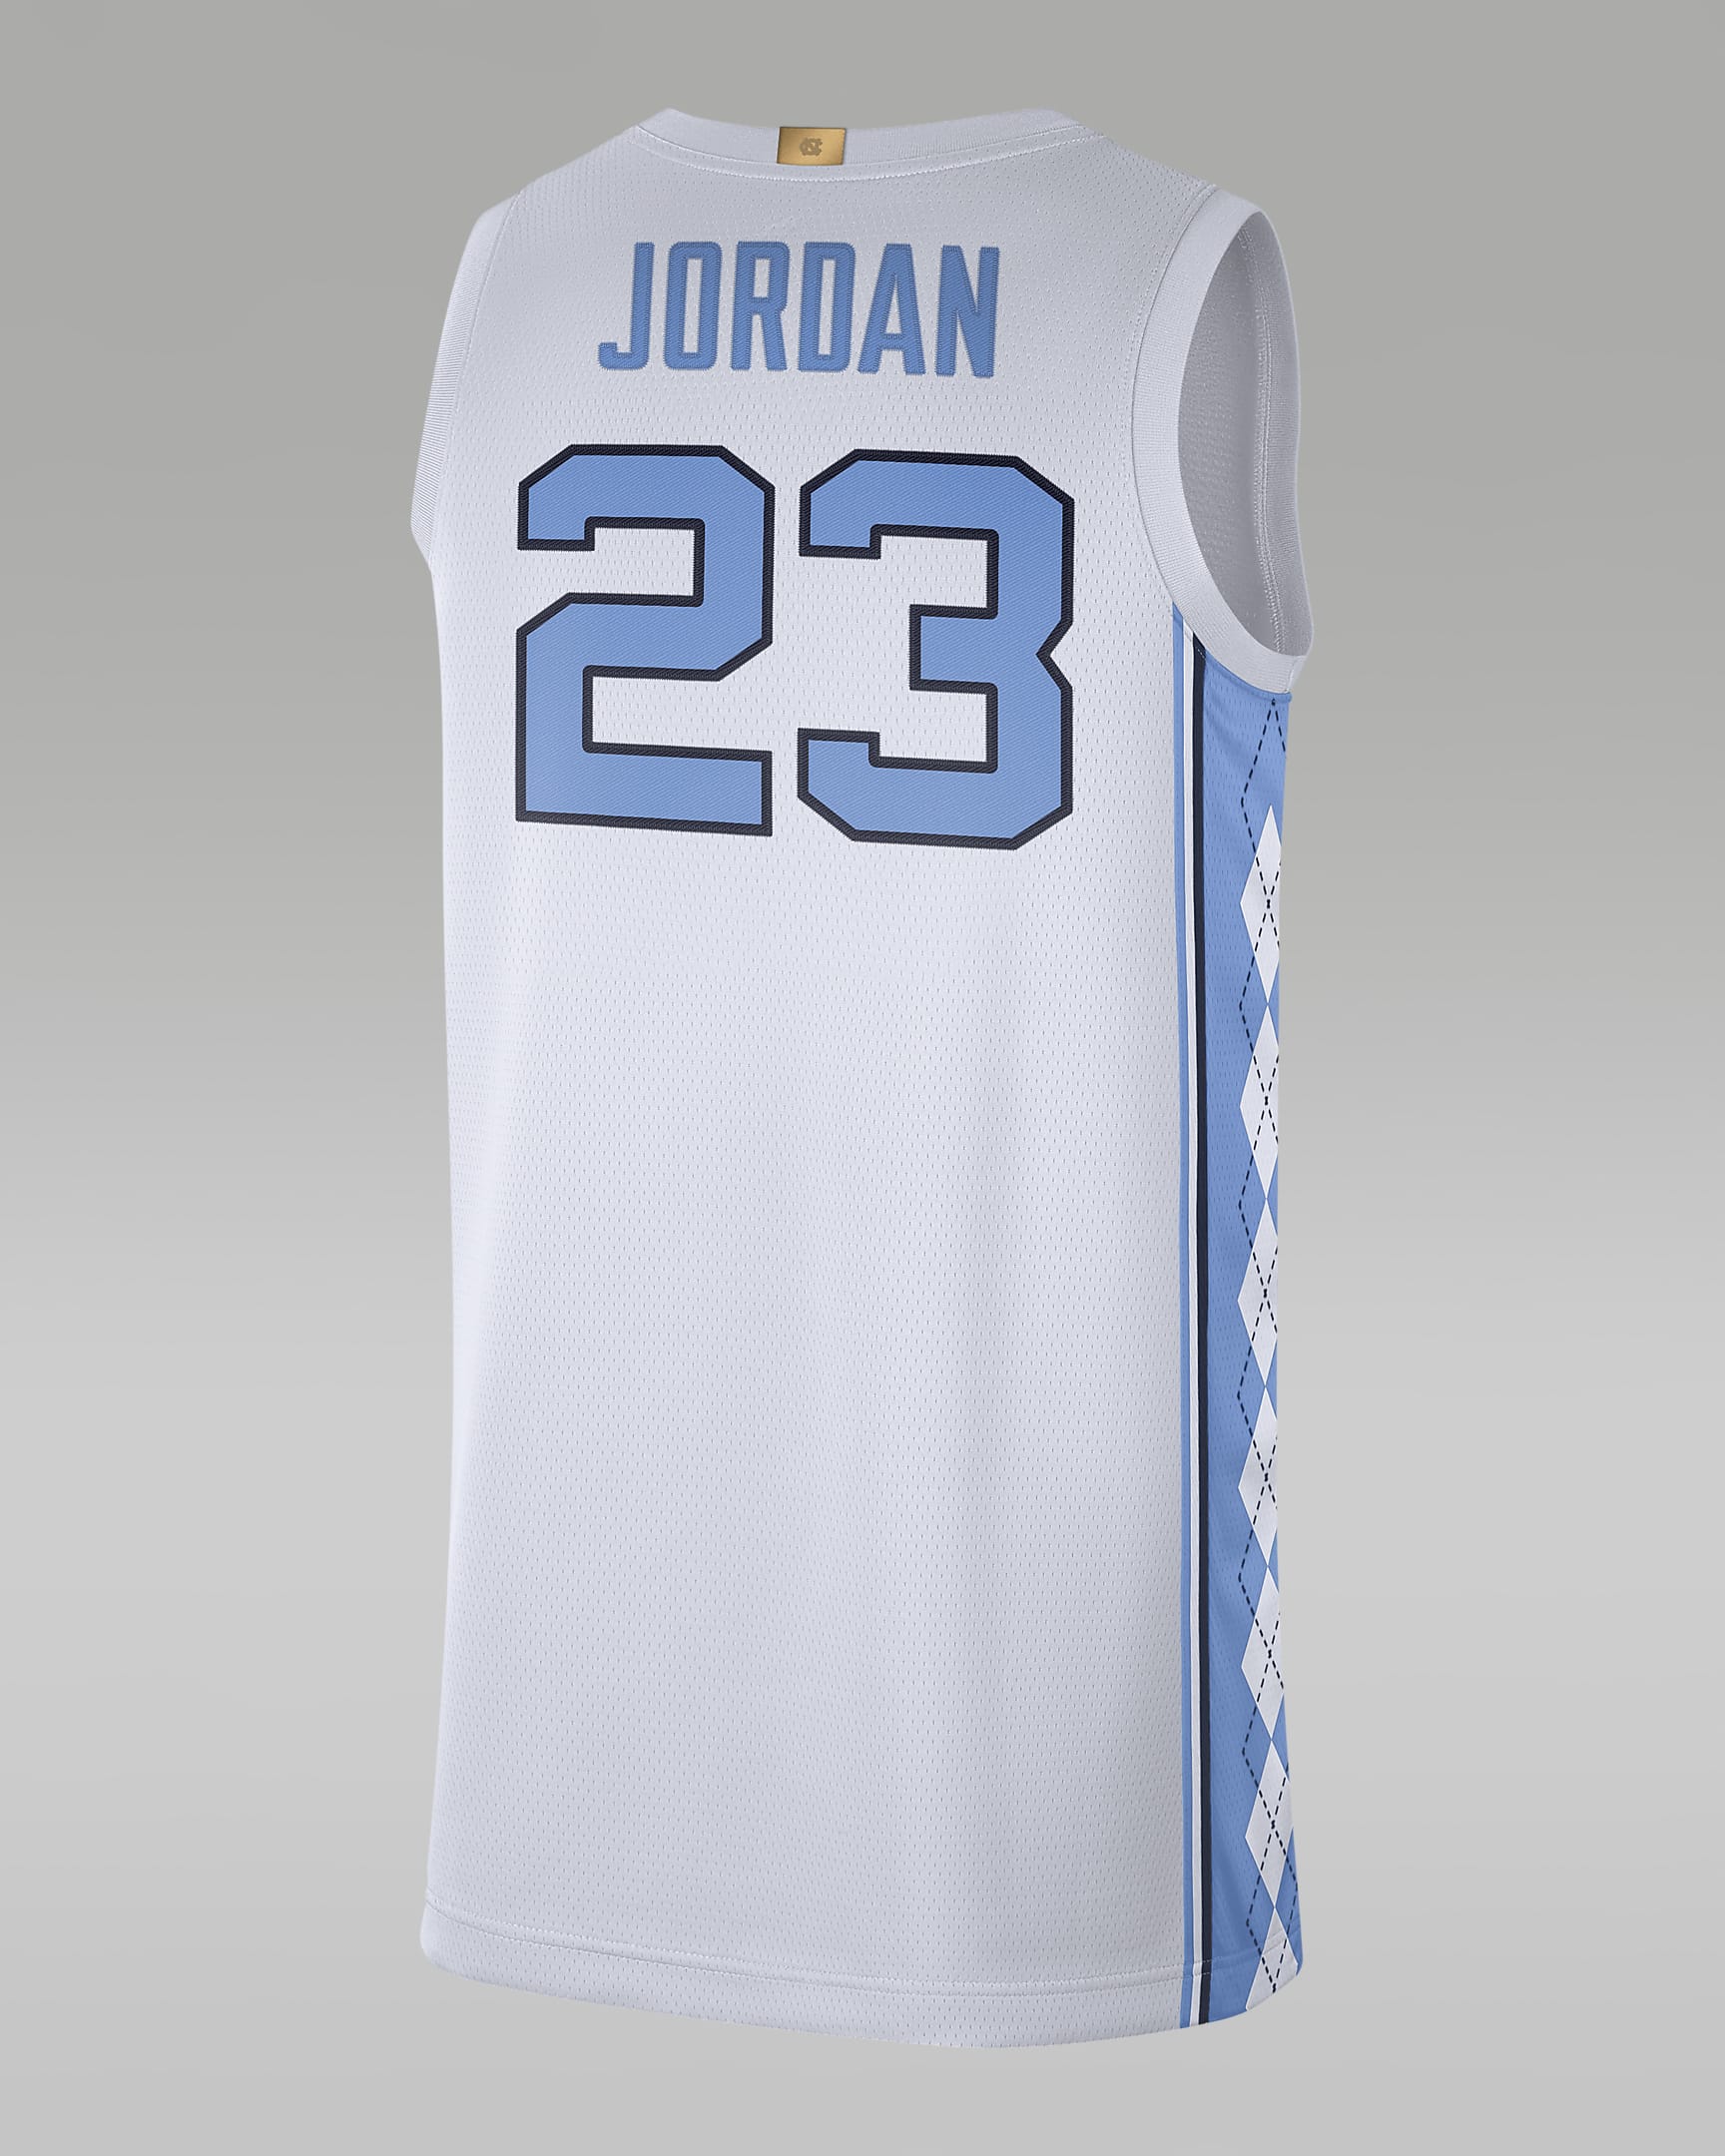 Jordan Limited Basketball Jersey LGWT3r 